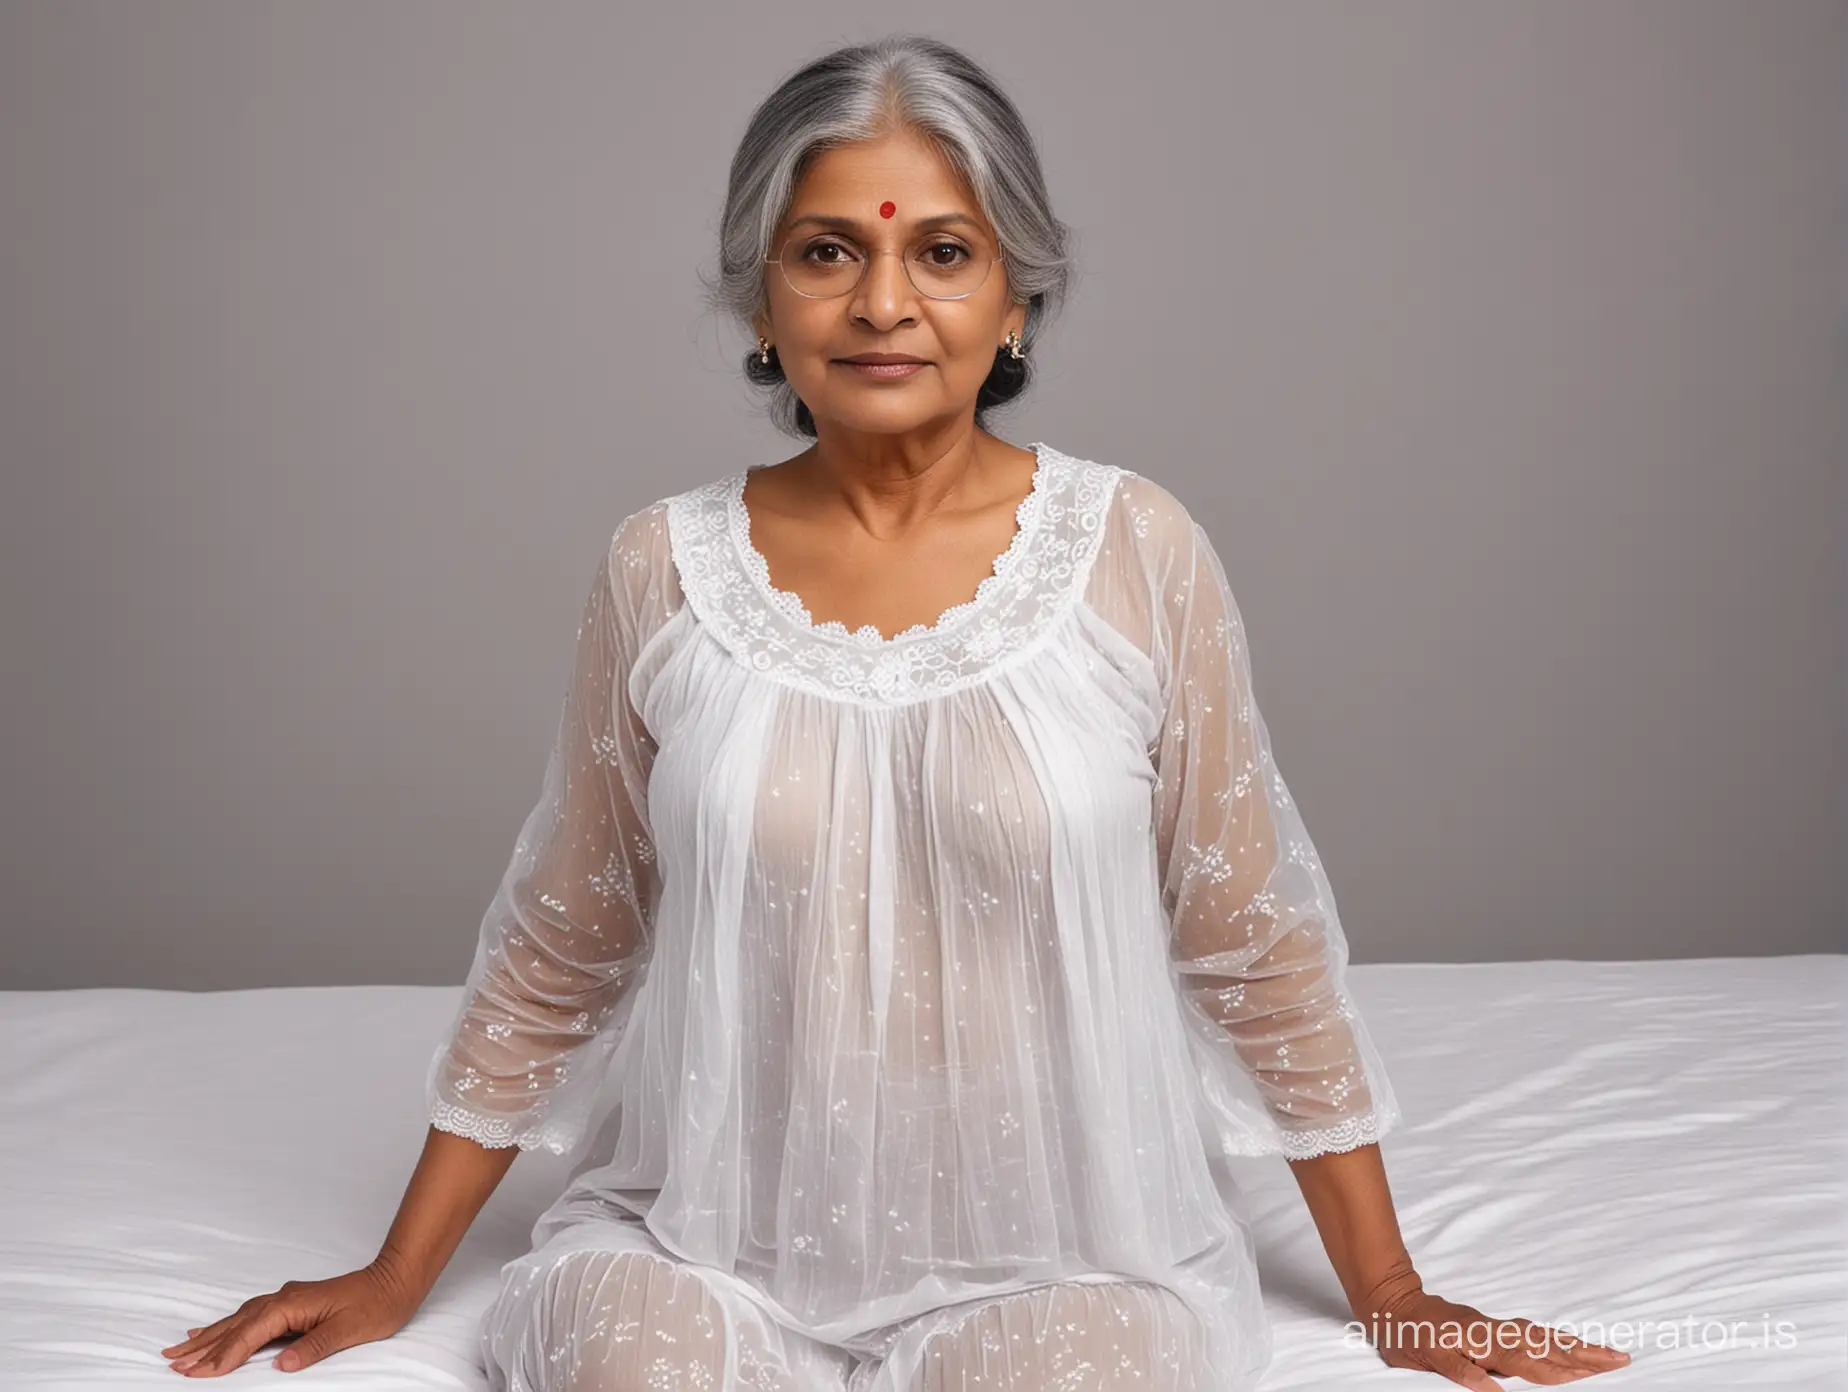 Elderly-Indian-Grandmother-in-Elegant-White-Nightwear-with-Sheer-Fabric